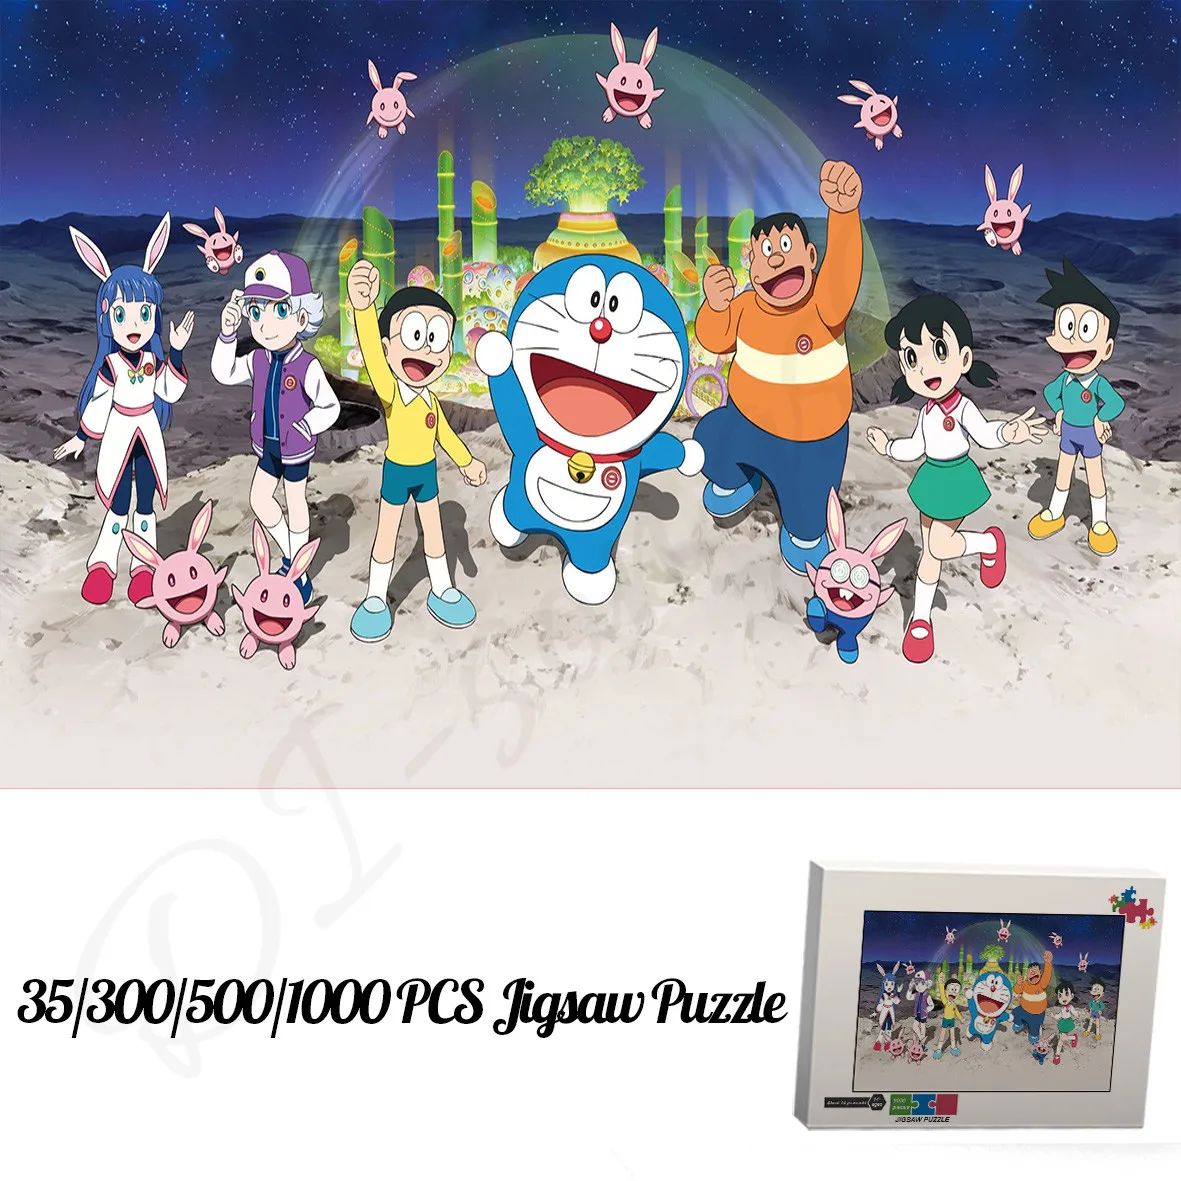 Doraemon: Nobita's Lunar Adventures Jigsaw Puzzles Bandai Cartoon Movie 35 300 500 1000 Pieces Wooden Puzzles Educational Toys фигурка bandai figuarts zero doraemon nobi nobita